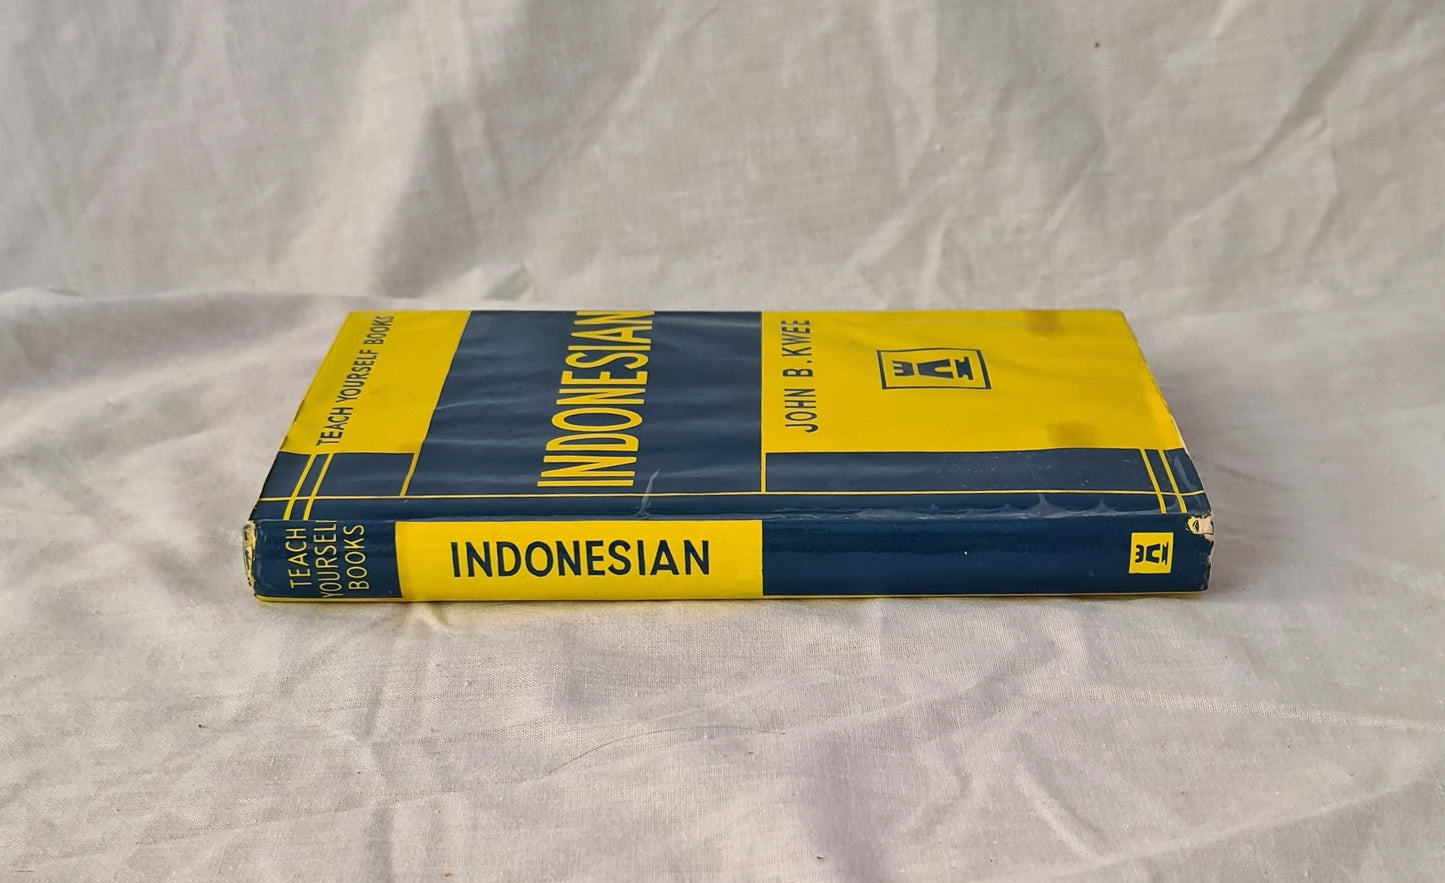 Teach Yourself Indonesian by John B. Kwee